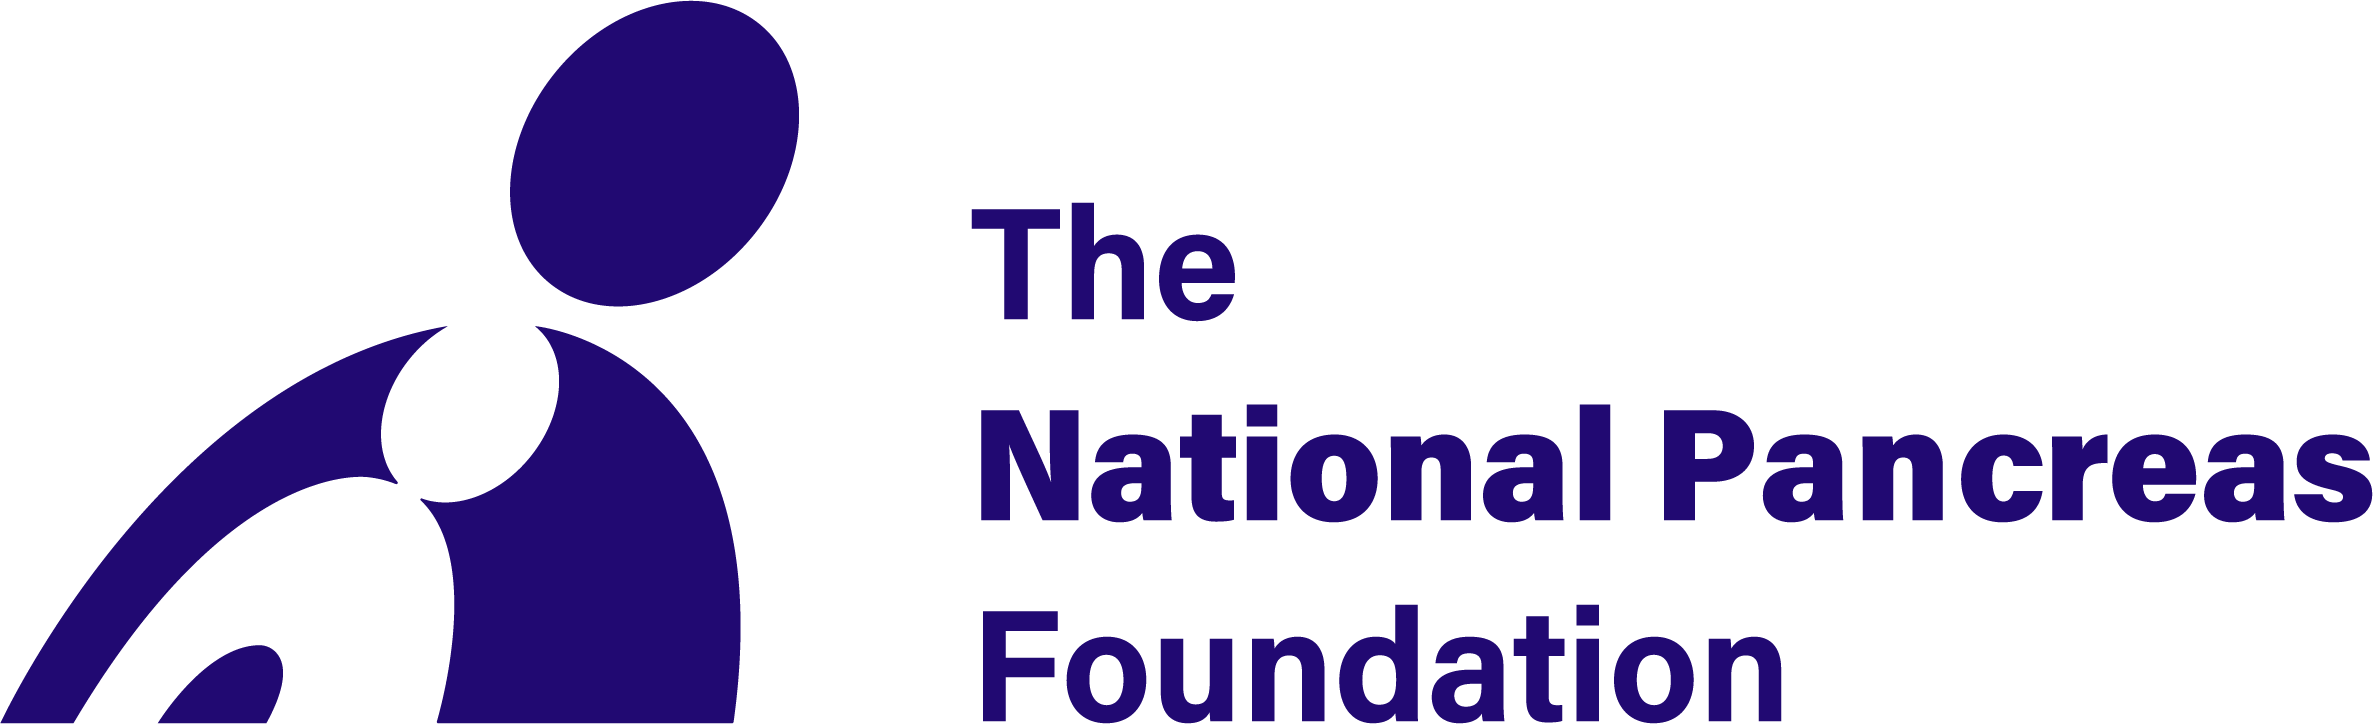 National pancreas foundation logo